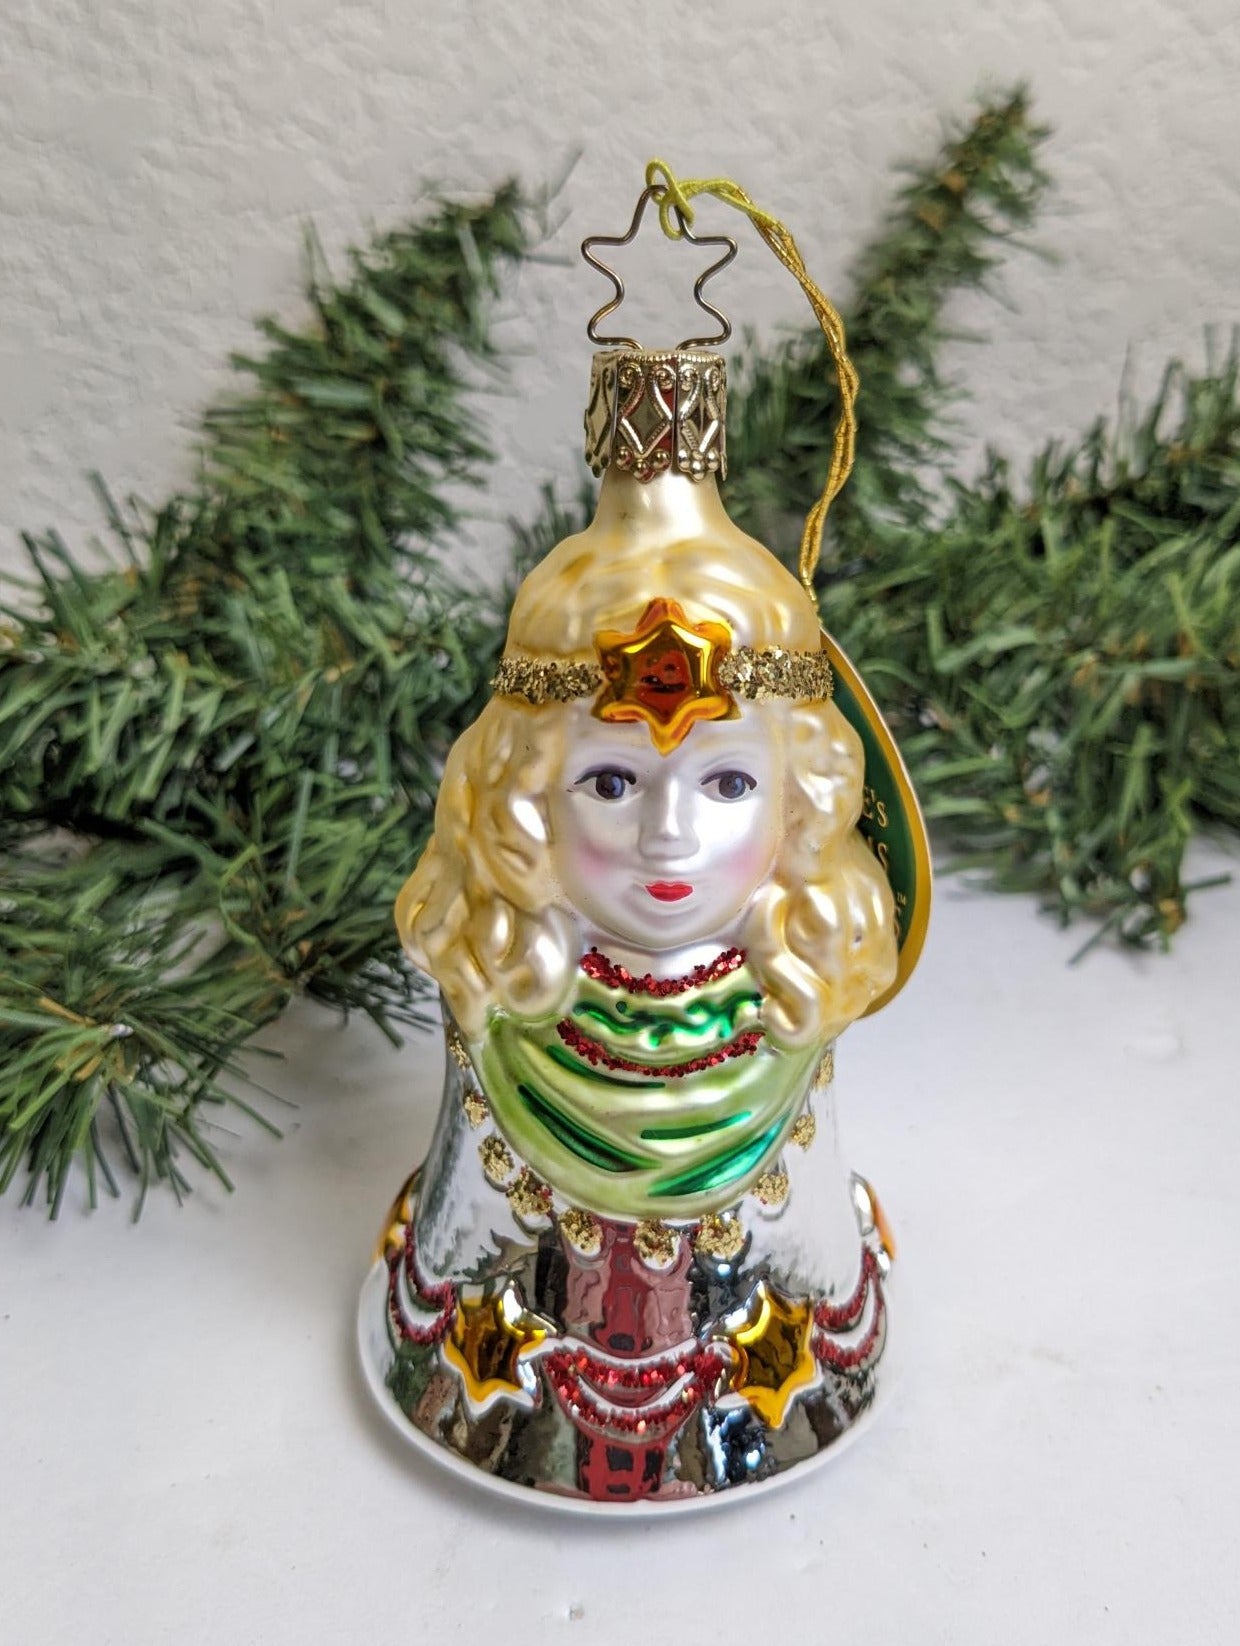 Angel Bell Inge Glas Retired 2003 Old World Christmas Ornament